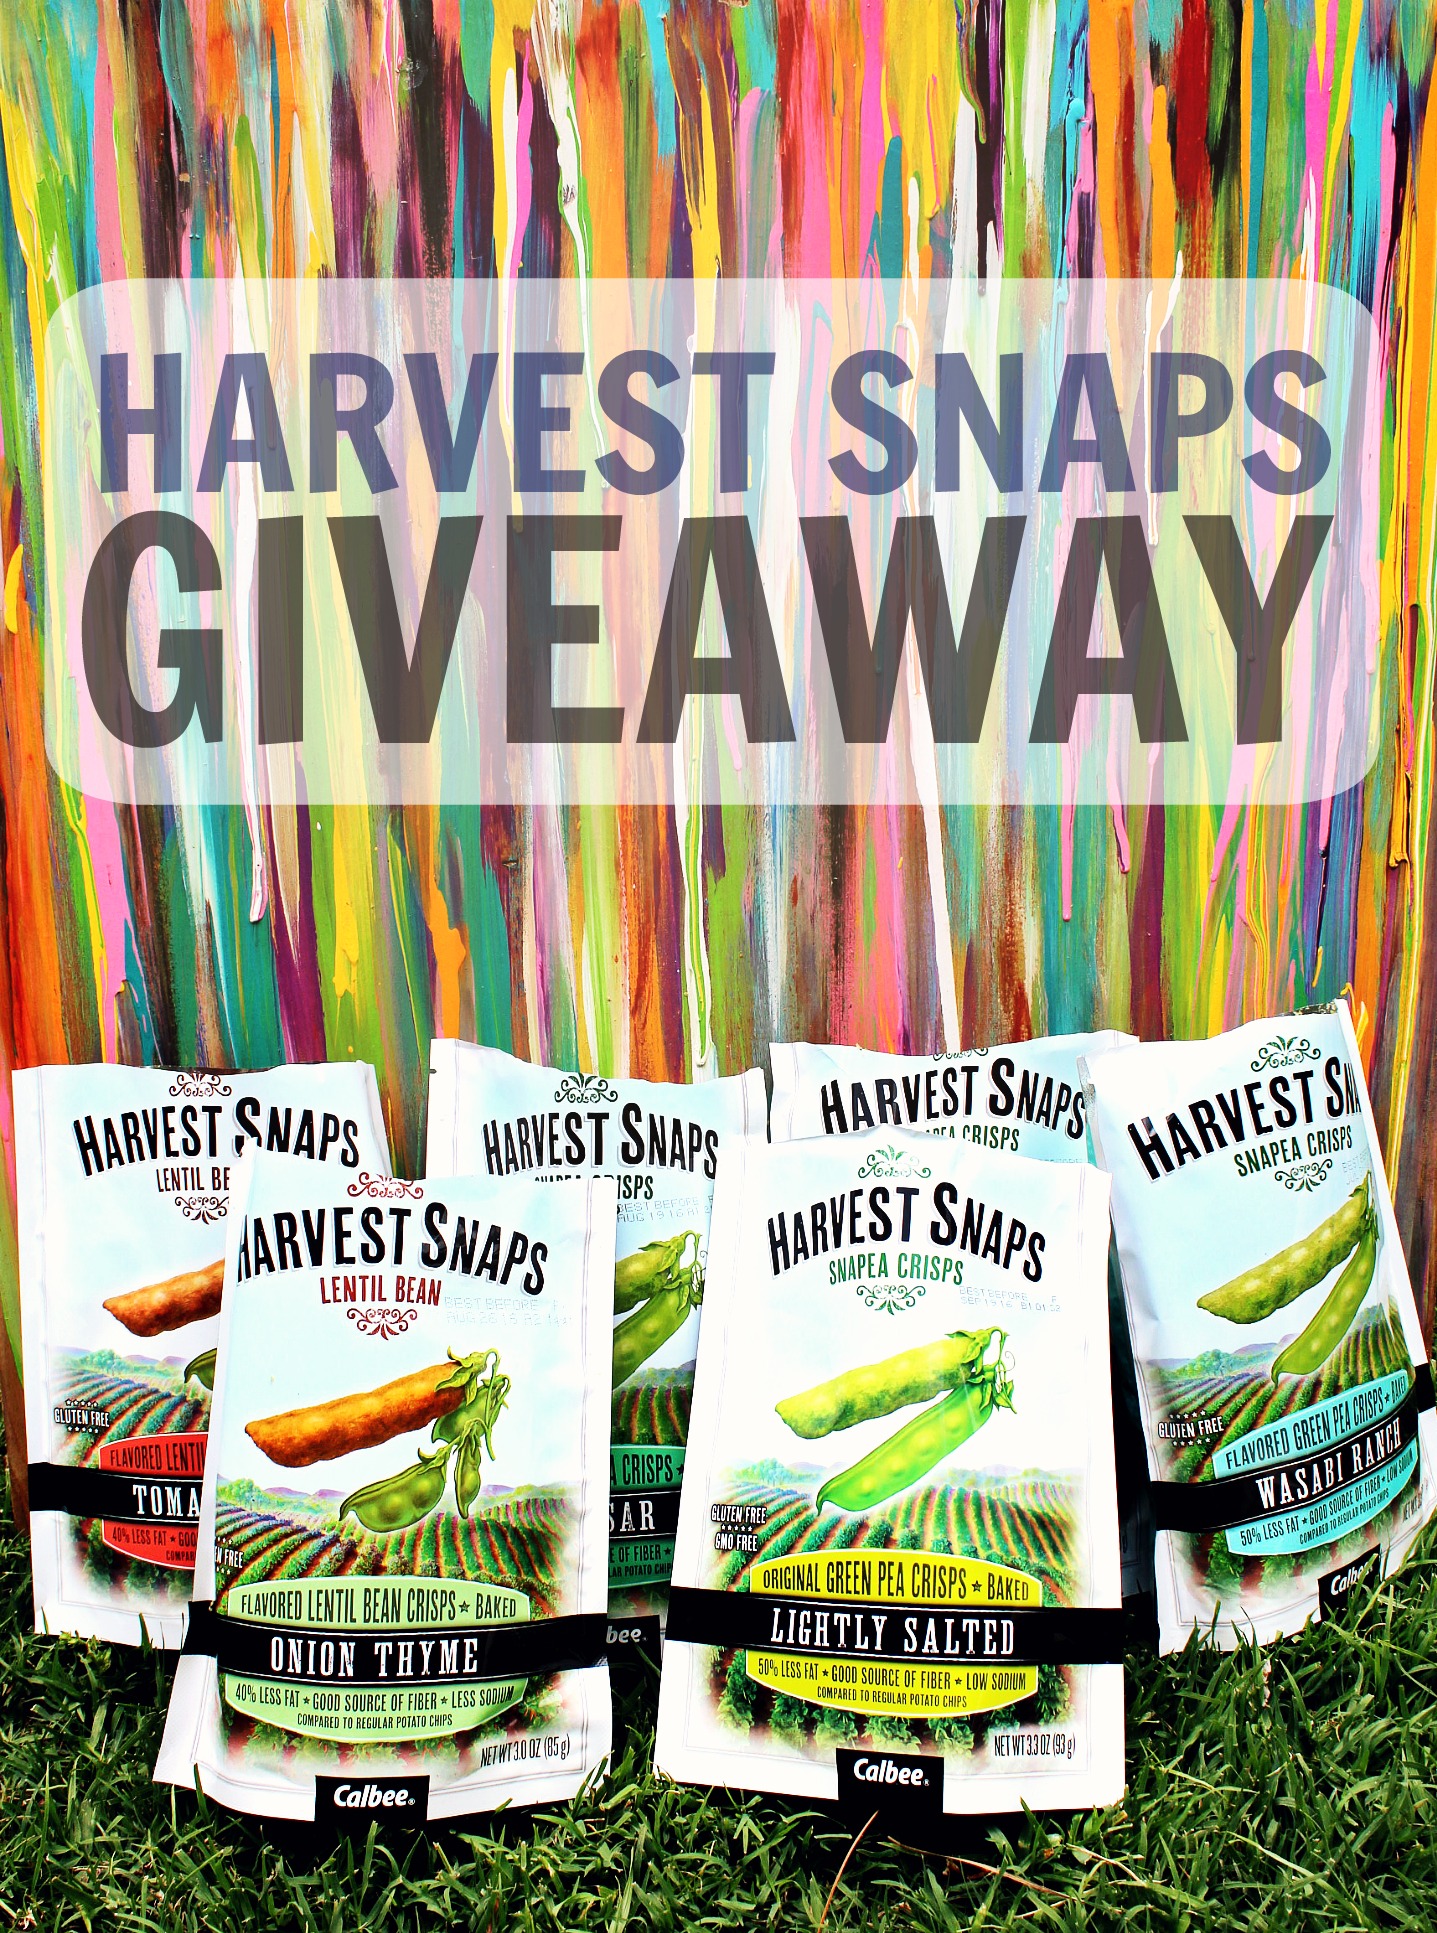 Harvest Snaps Giveaway